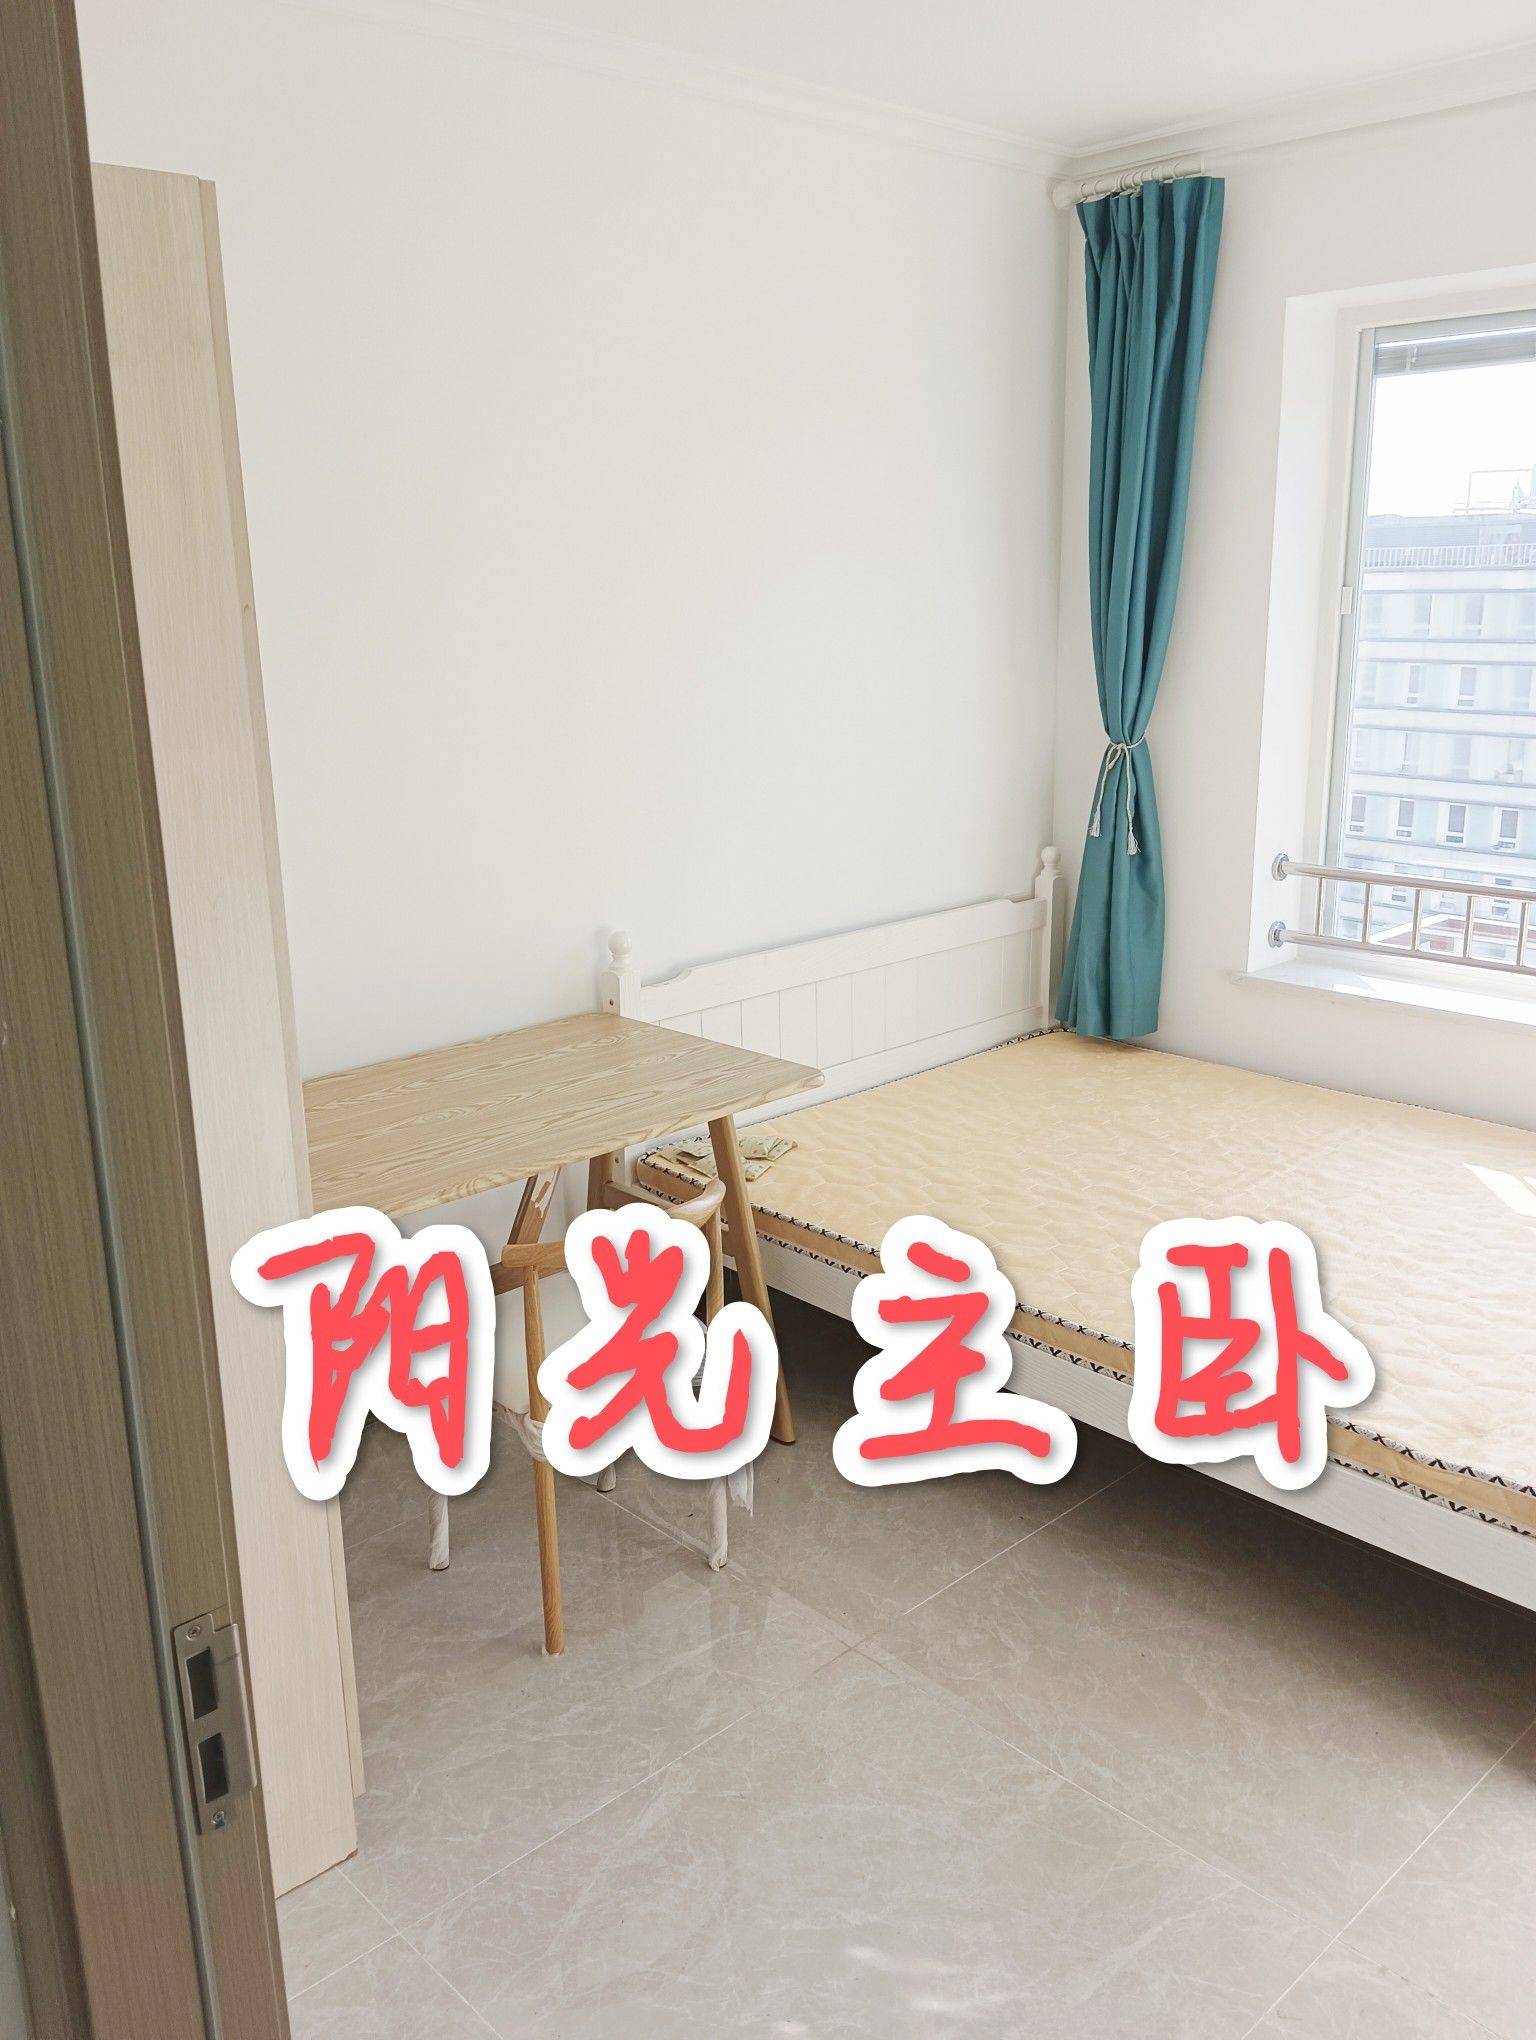 Beijing-Haidian-Cozy Home,Clean&Comfy,No Gender Limit,Hustle & Bustle,Chilled